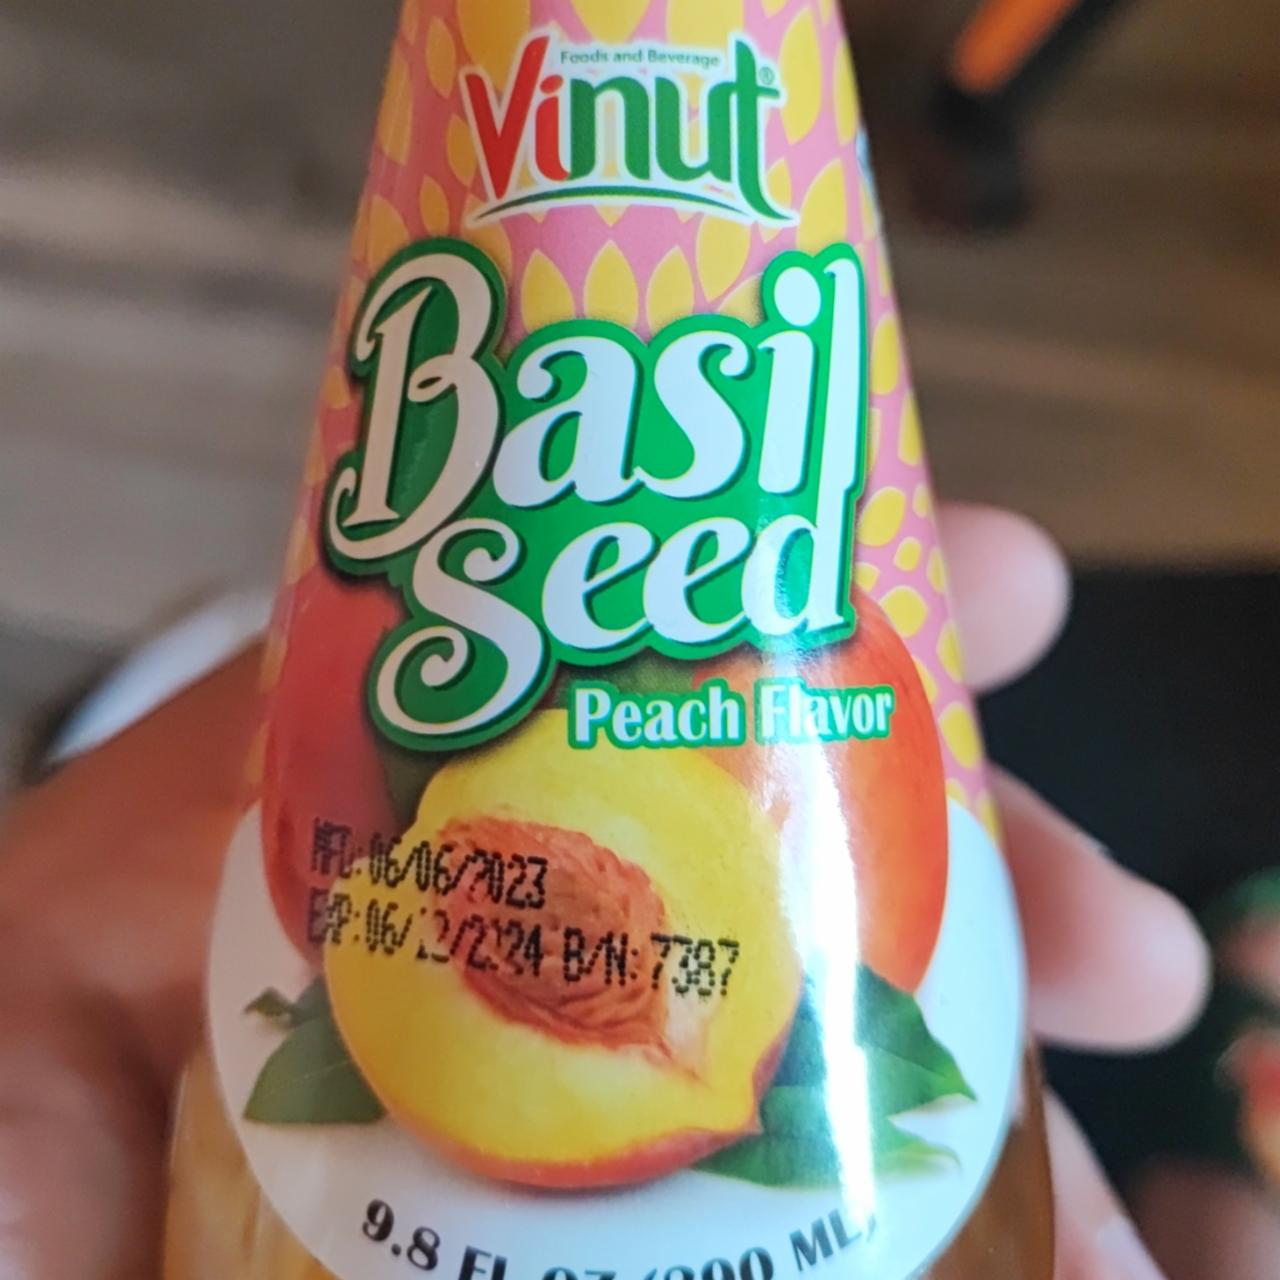 Fotografie - Basil Seed Peach Flavor Vinut